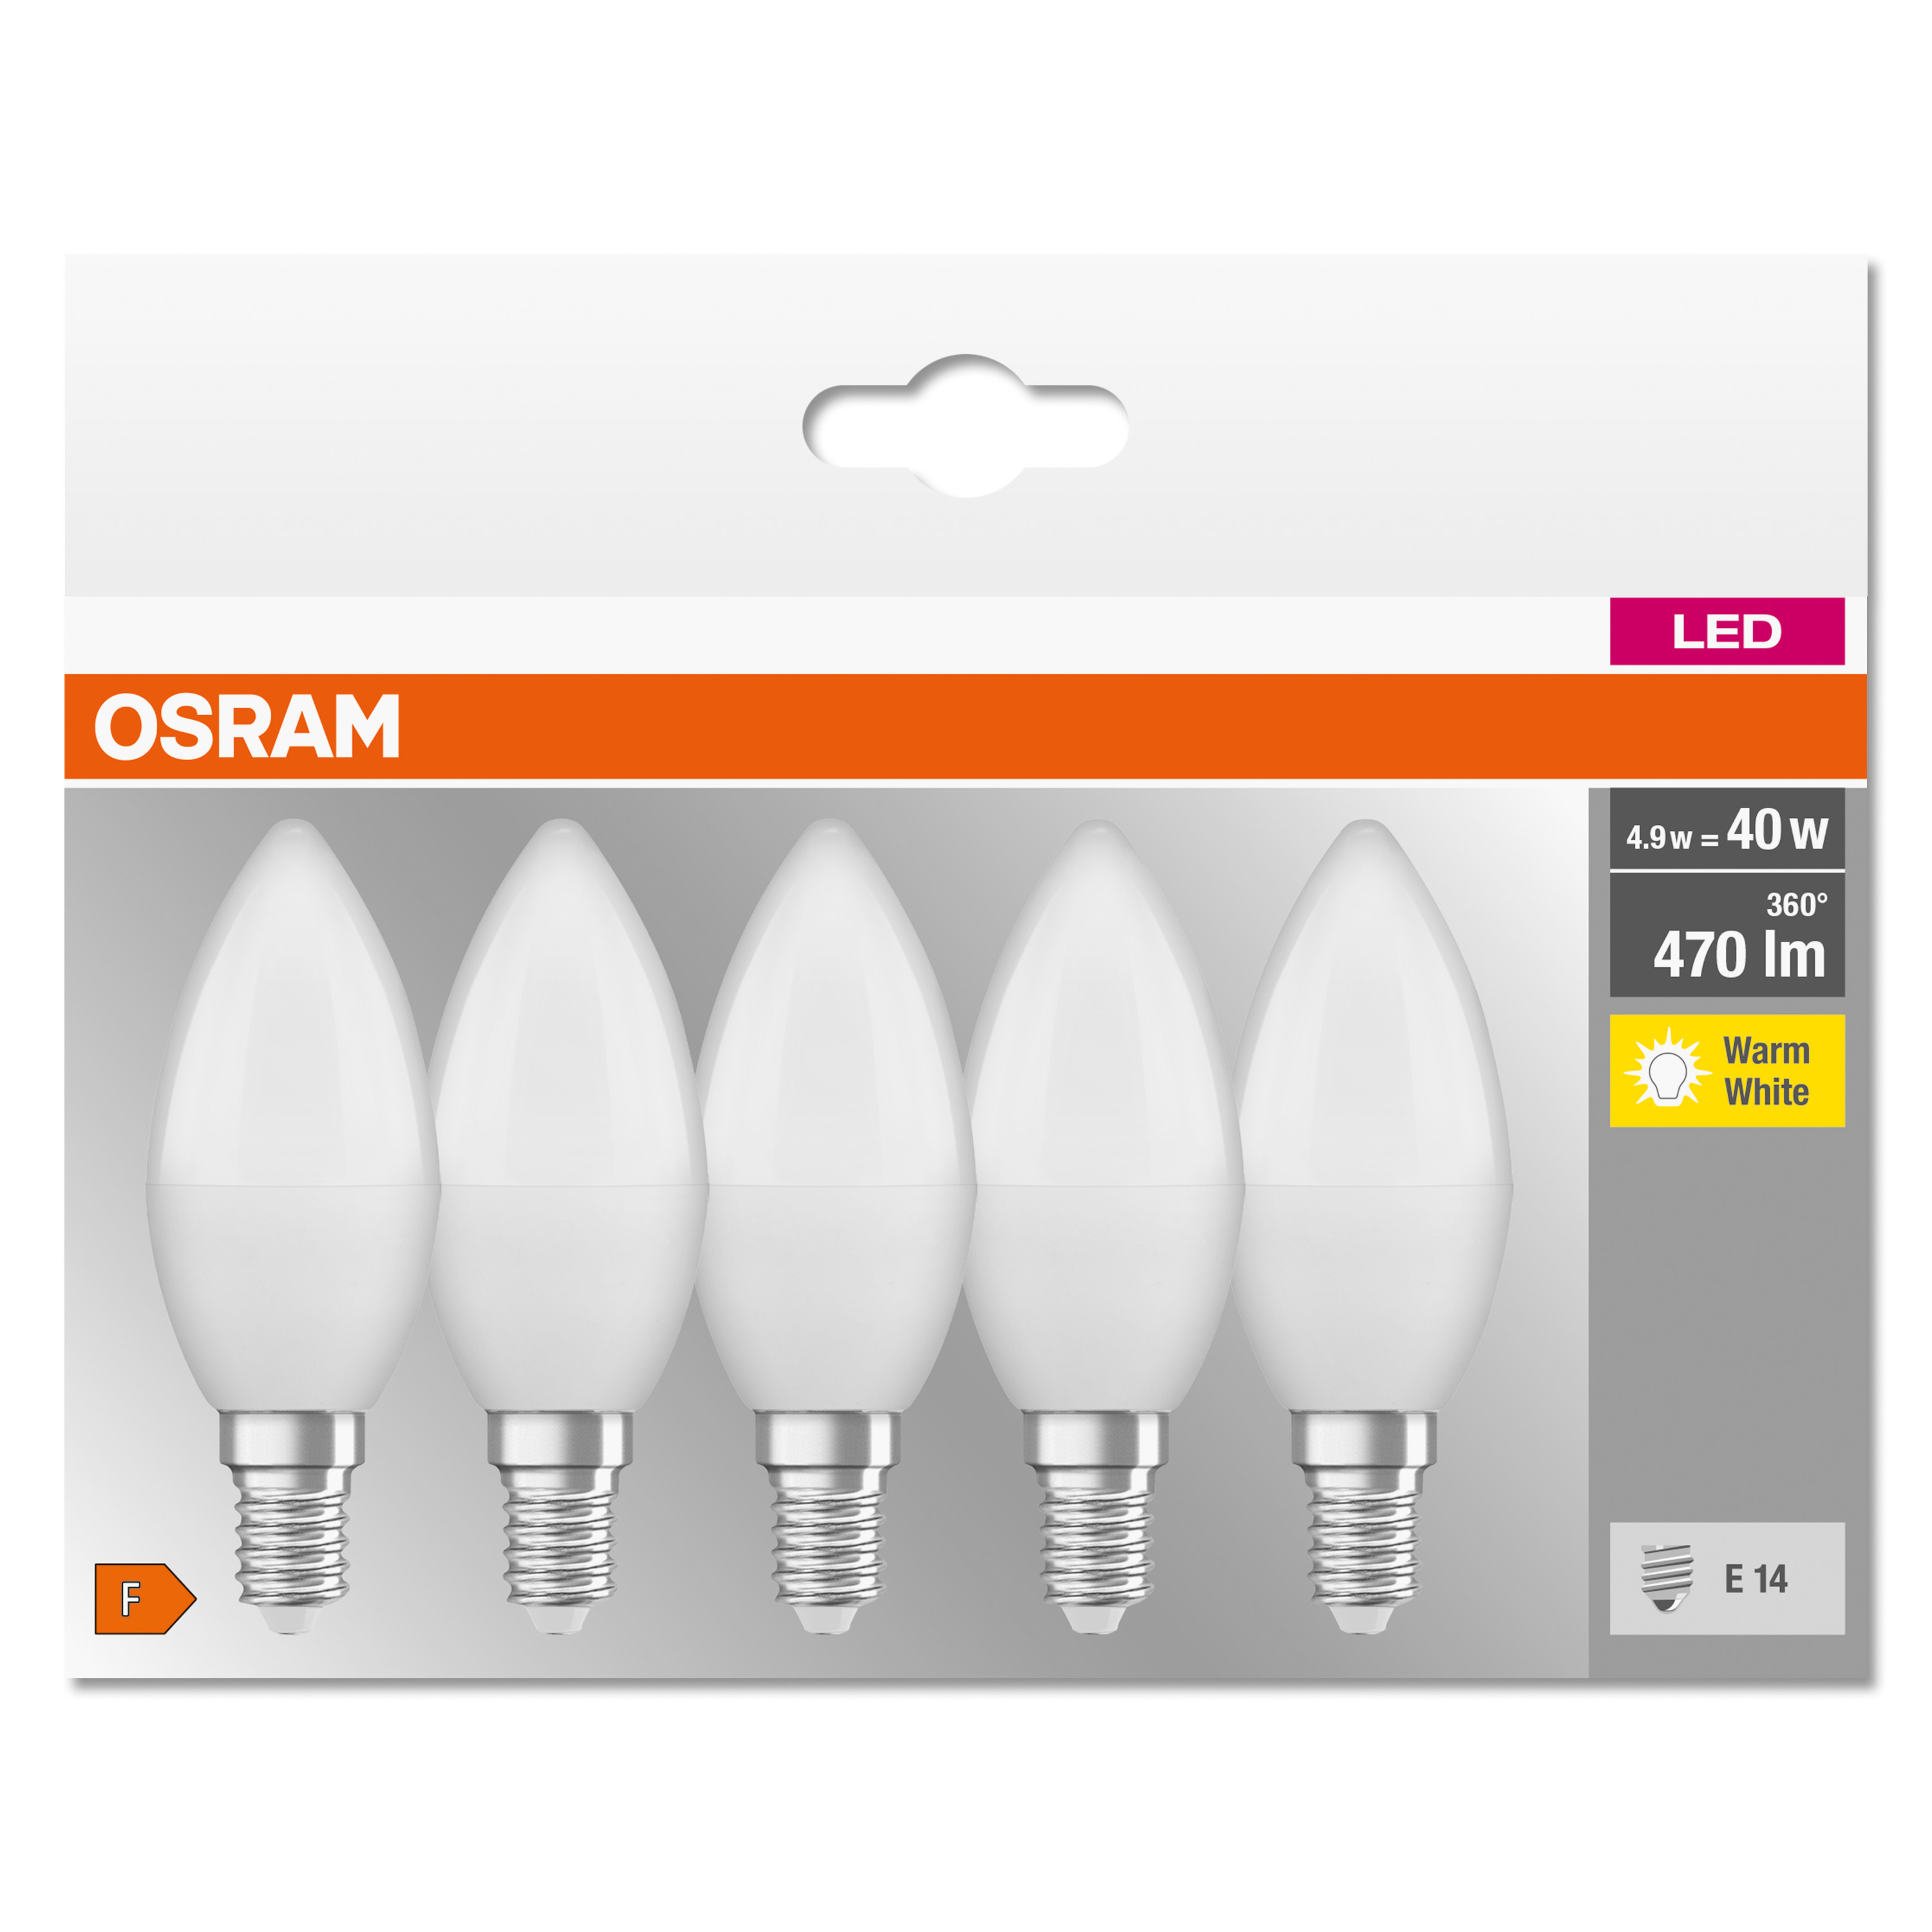 CLASSIC Lampe B BASE Warmweiß 470 lumen LED OSRAM  LED